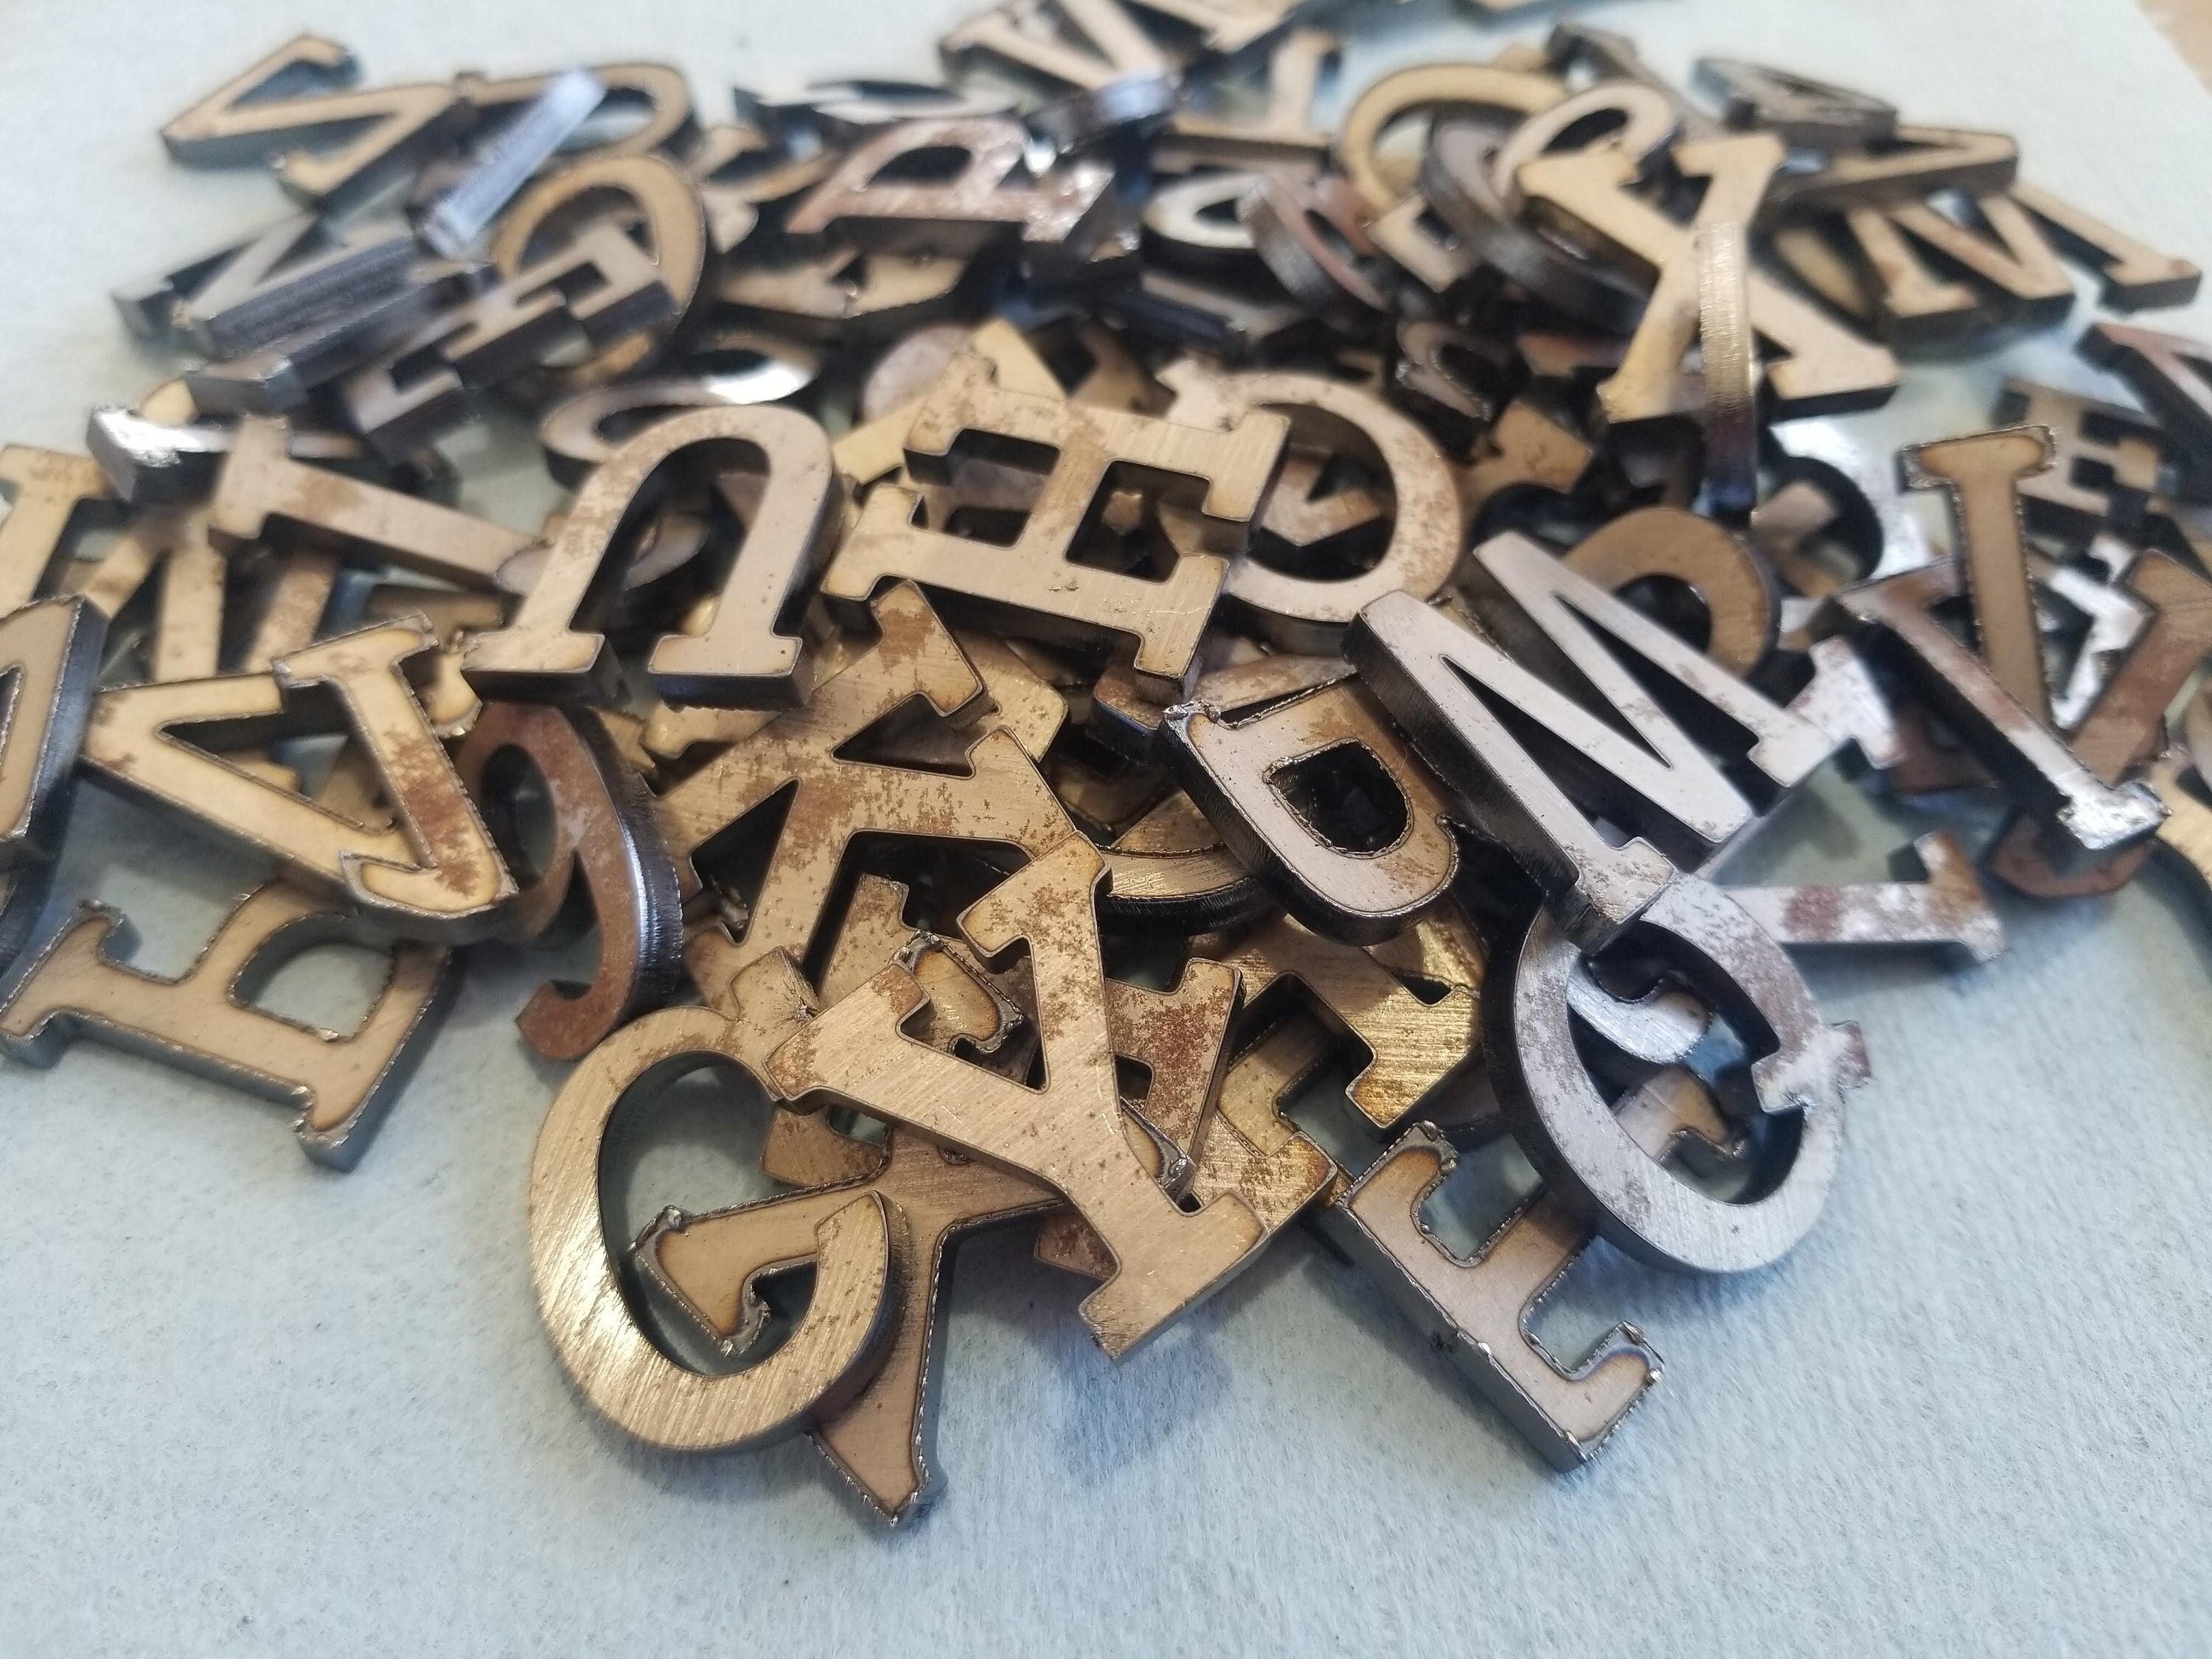 Metal Letters for Crafts, Small 11 Gauge Steel Letters Slab Font 